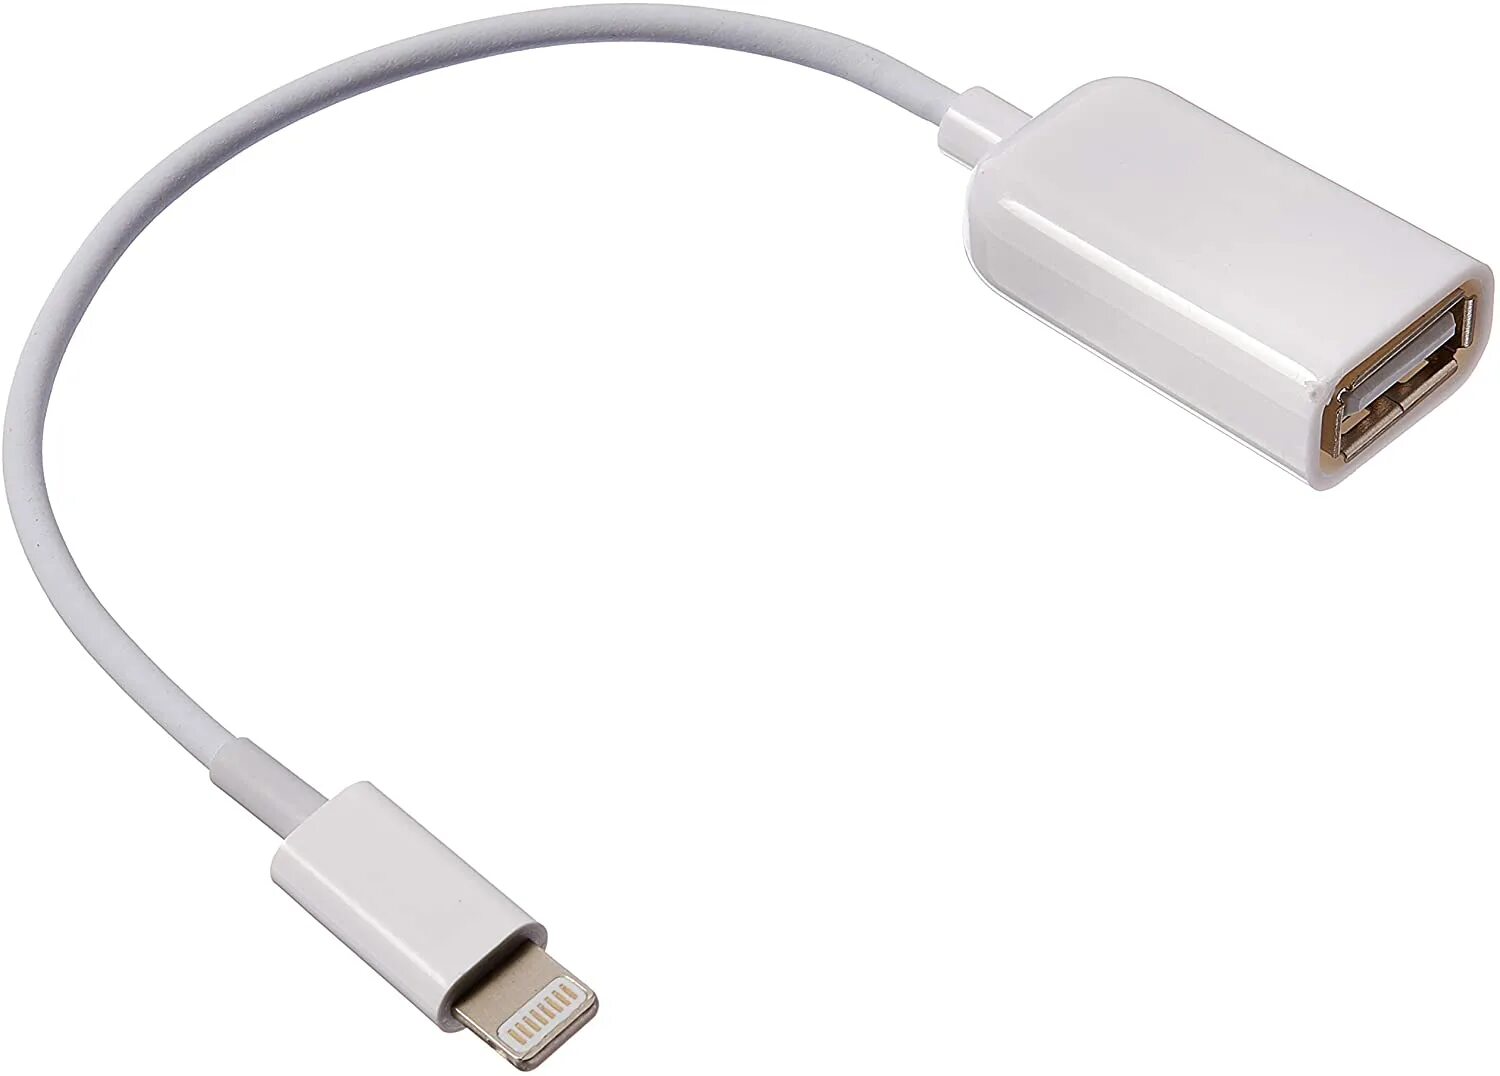 Переходник OTG Lightning на USB. OTG переходник Apple. OTG Lightning USB 3.0. Переходник для Apple Lightning 8pin на USB мама.